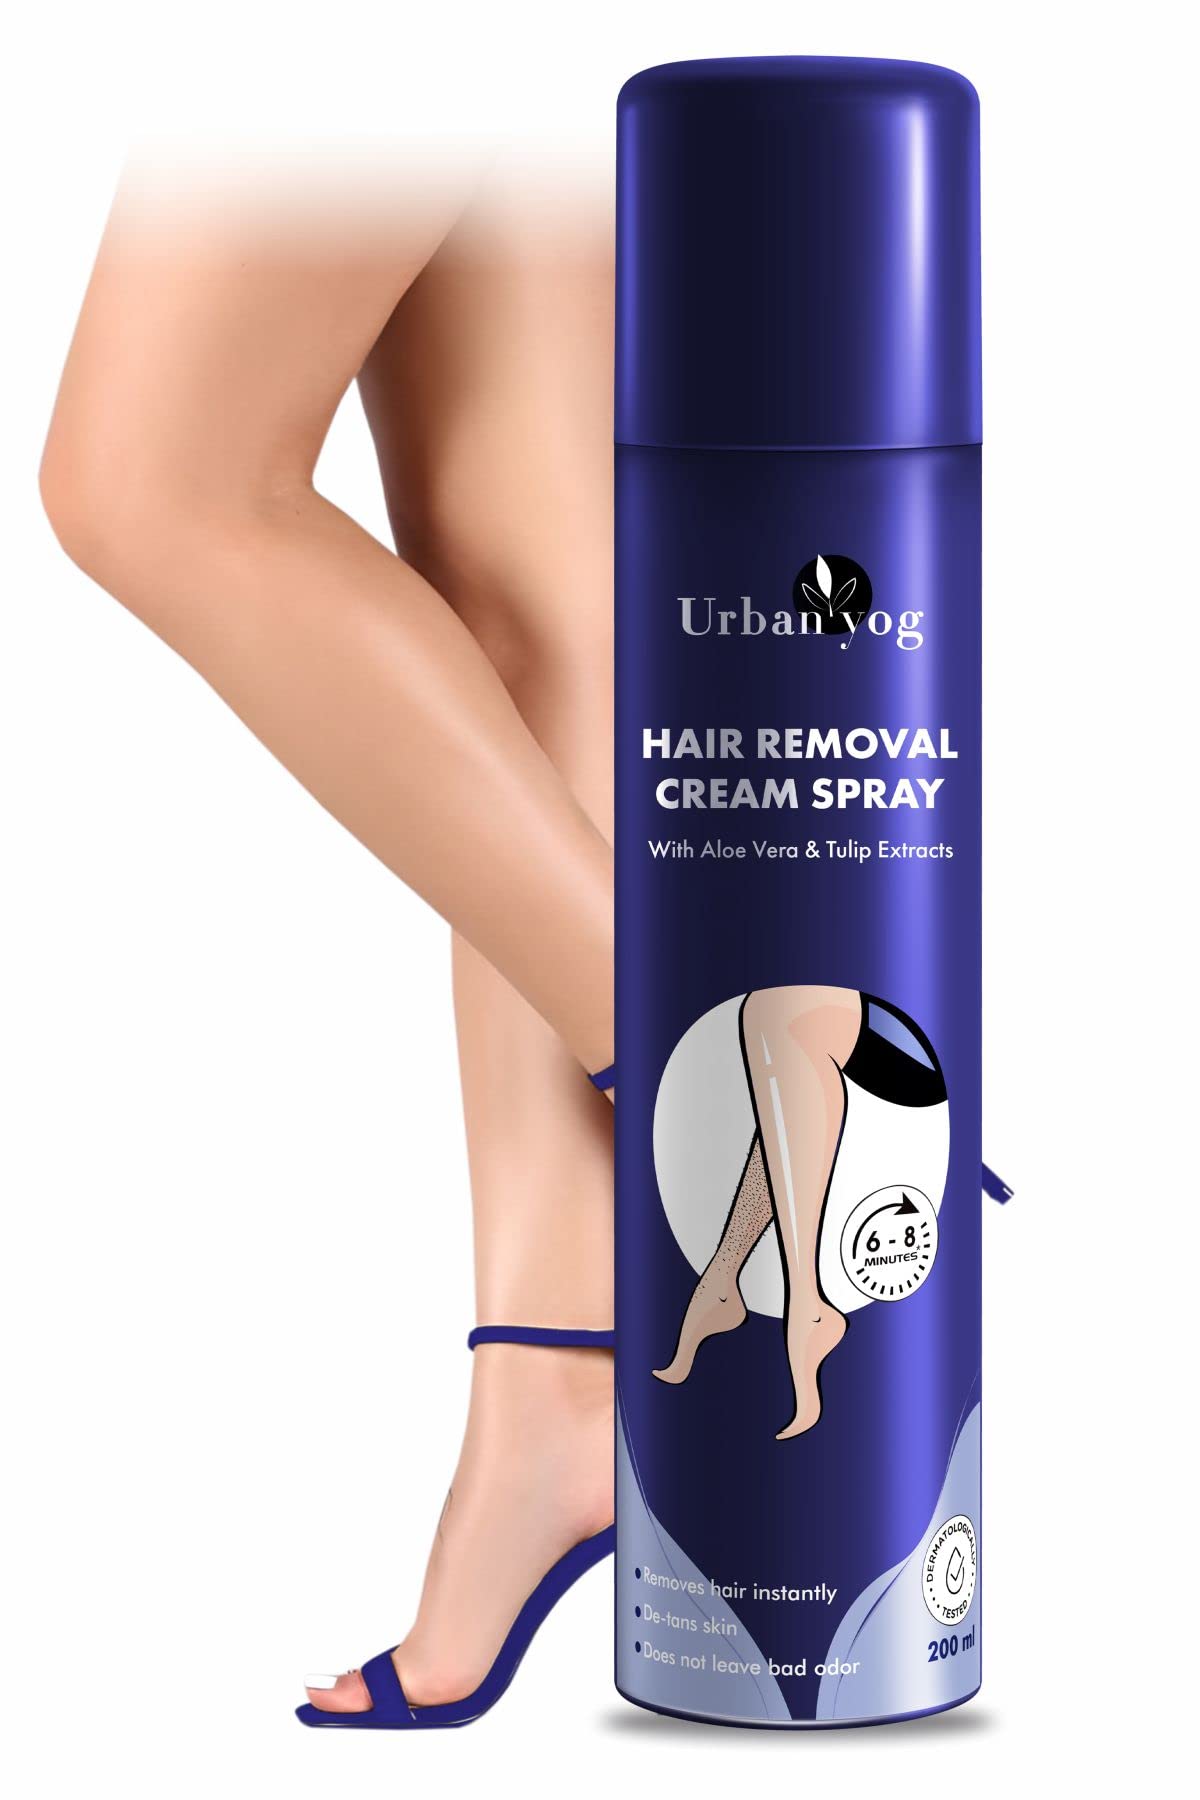 Urban Yog Hair Removal Cream Spray for Women (Tulip) (200 ML * Pack of 2)